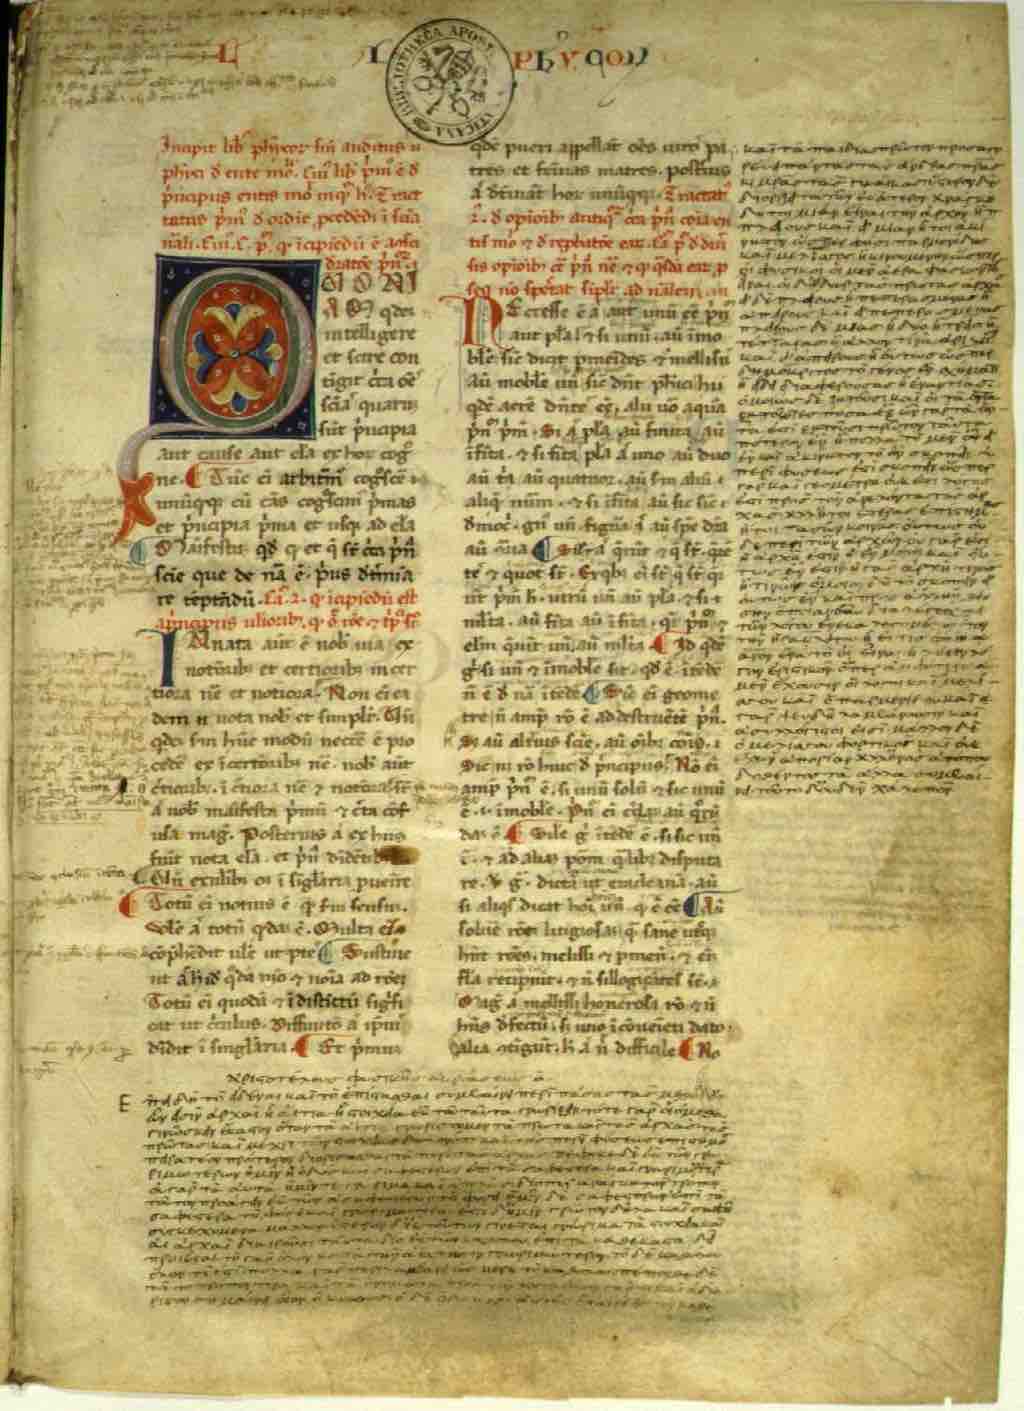 Aristotle, beginning of Physics. Medieval latin manuscript, original Greek text added in the margins.